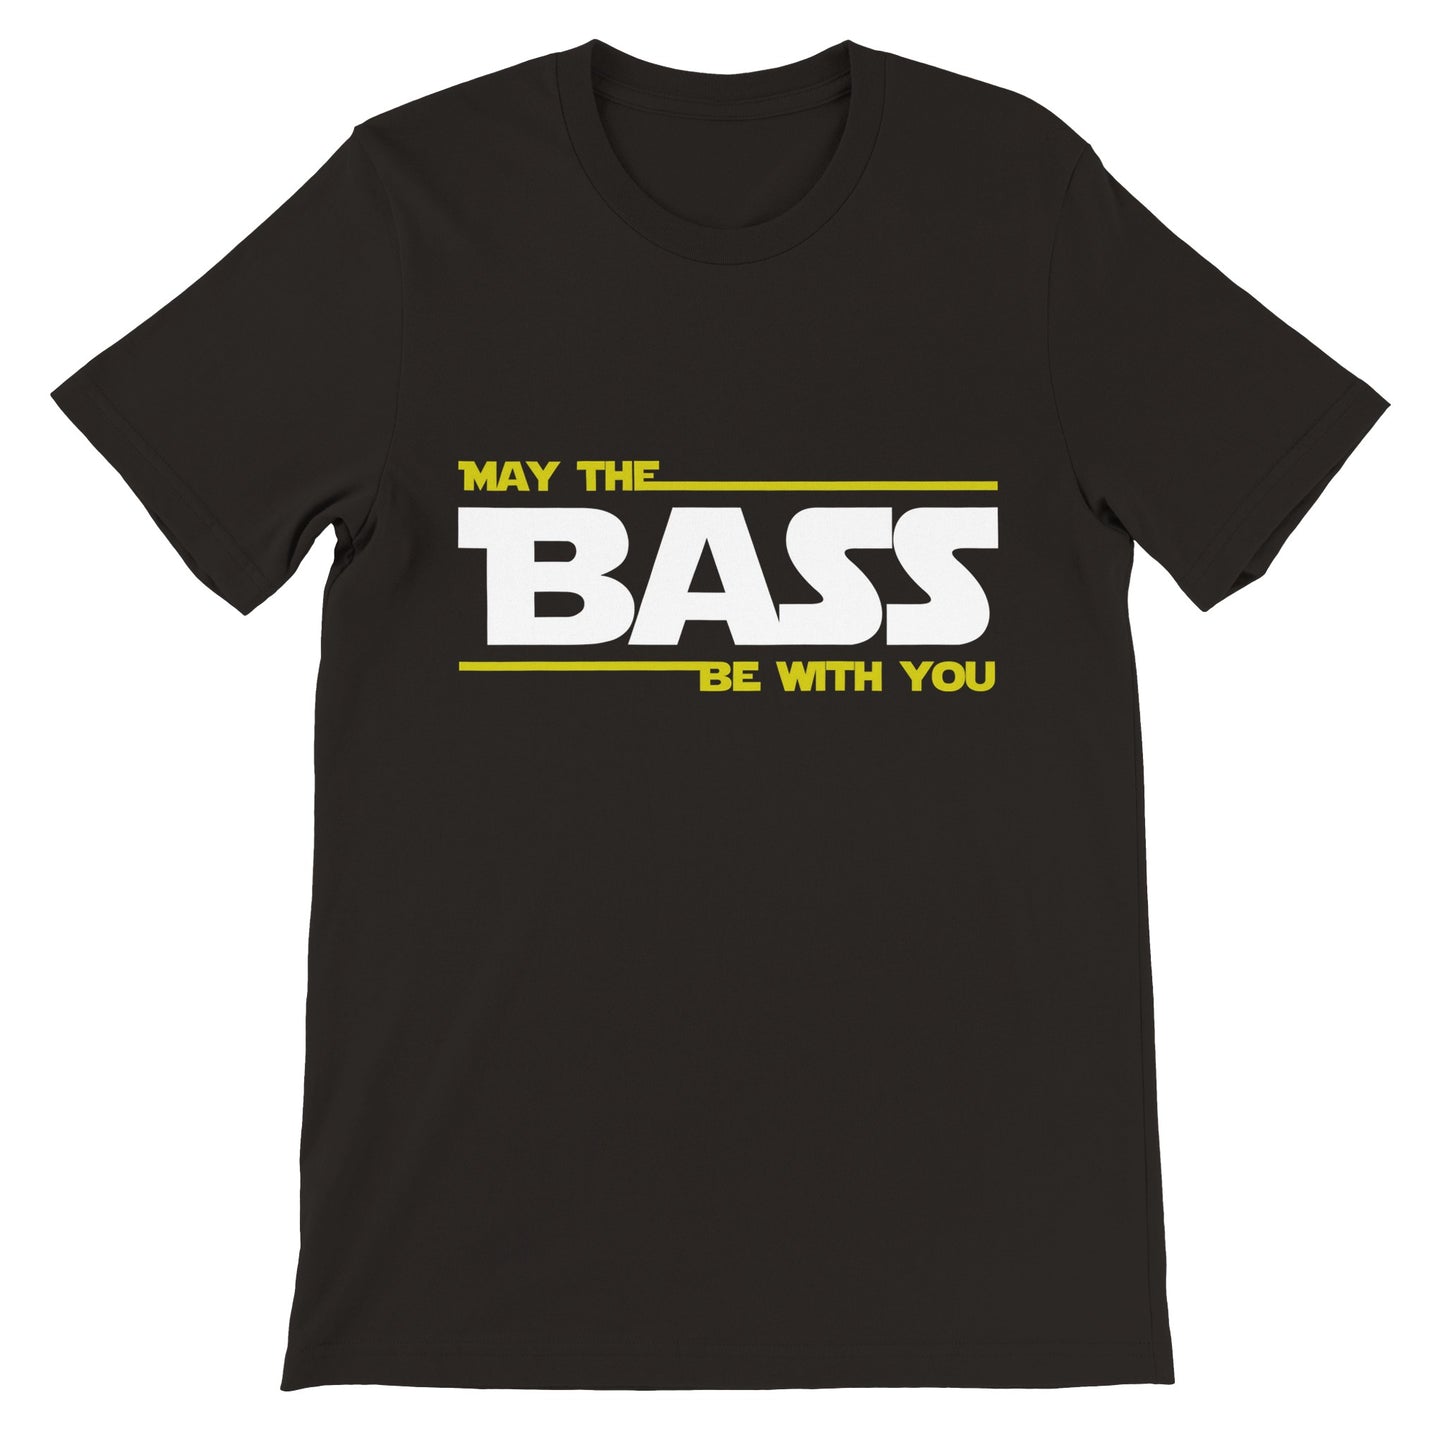 May the Bass be with you - Premium Männer / Unisex T-Shirt mit Rundhalsausschnitt